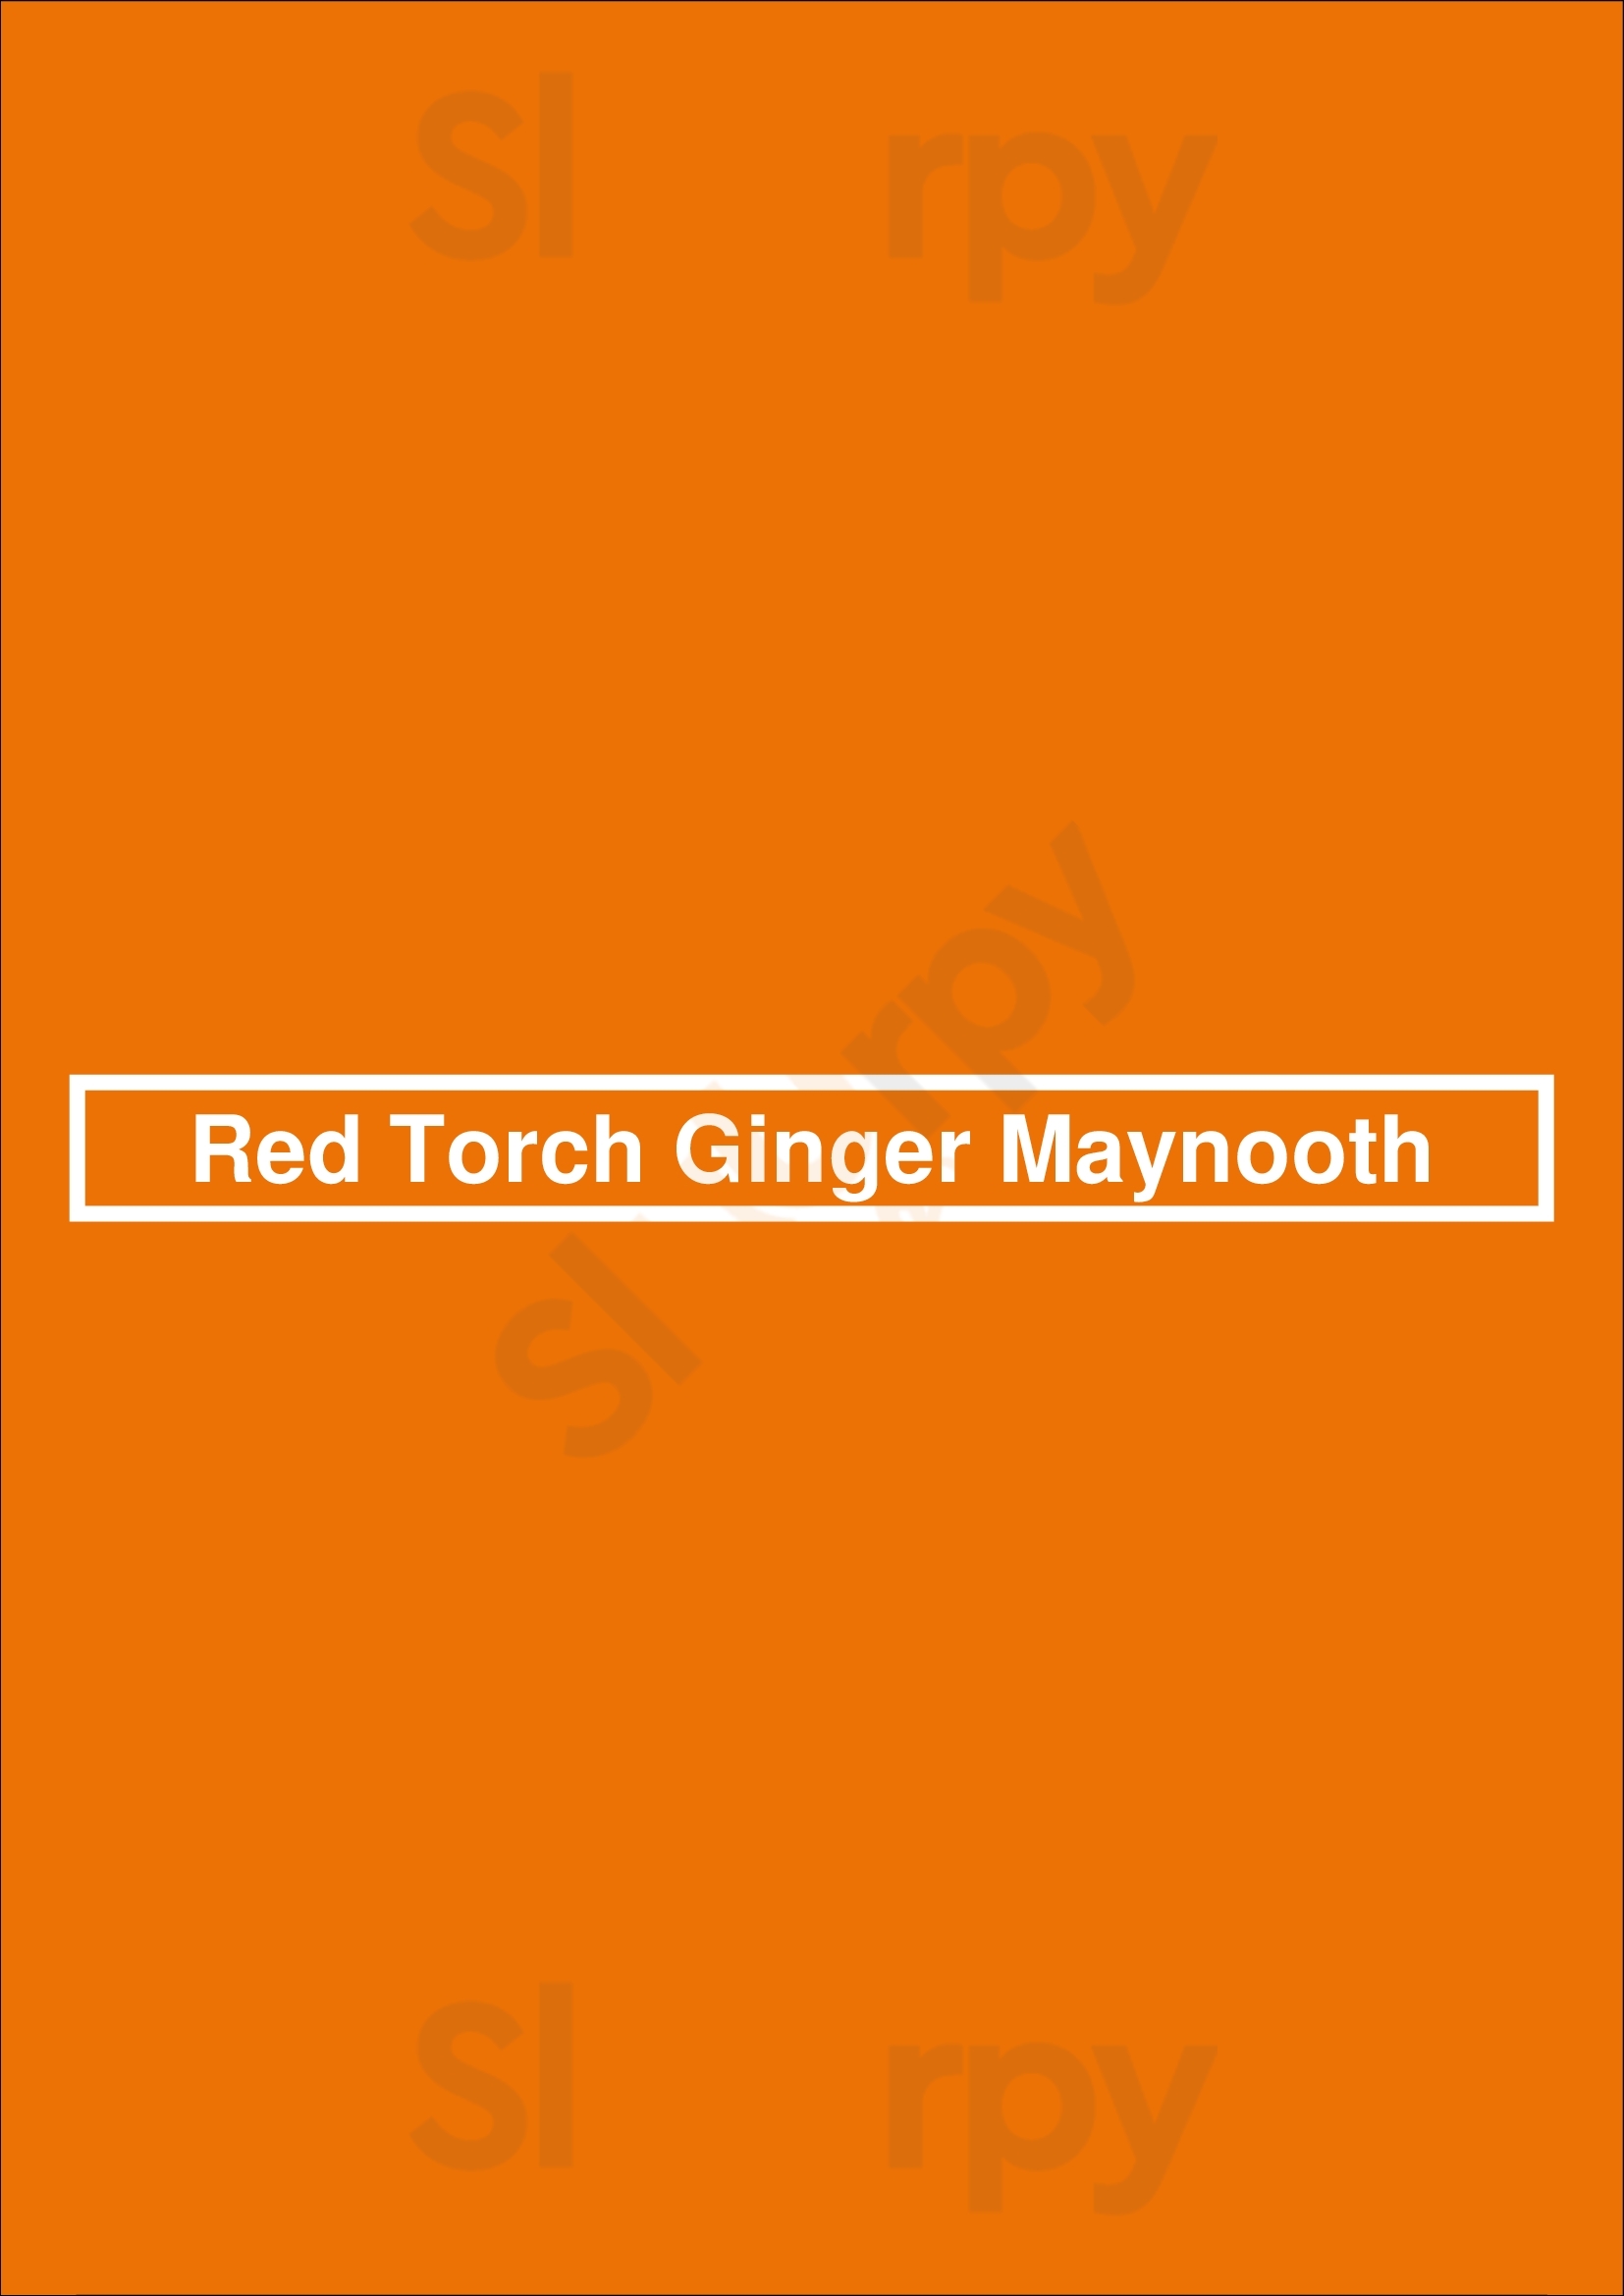 Red Torch Ginger Maynooth Maynooth Menu - 1